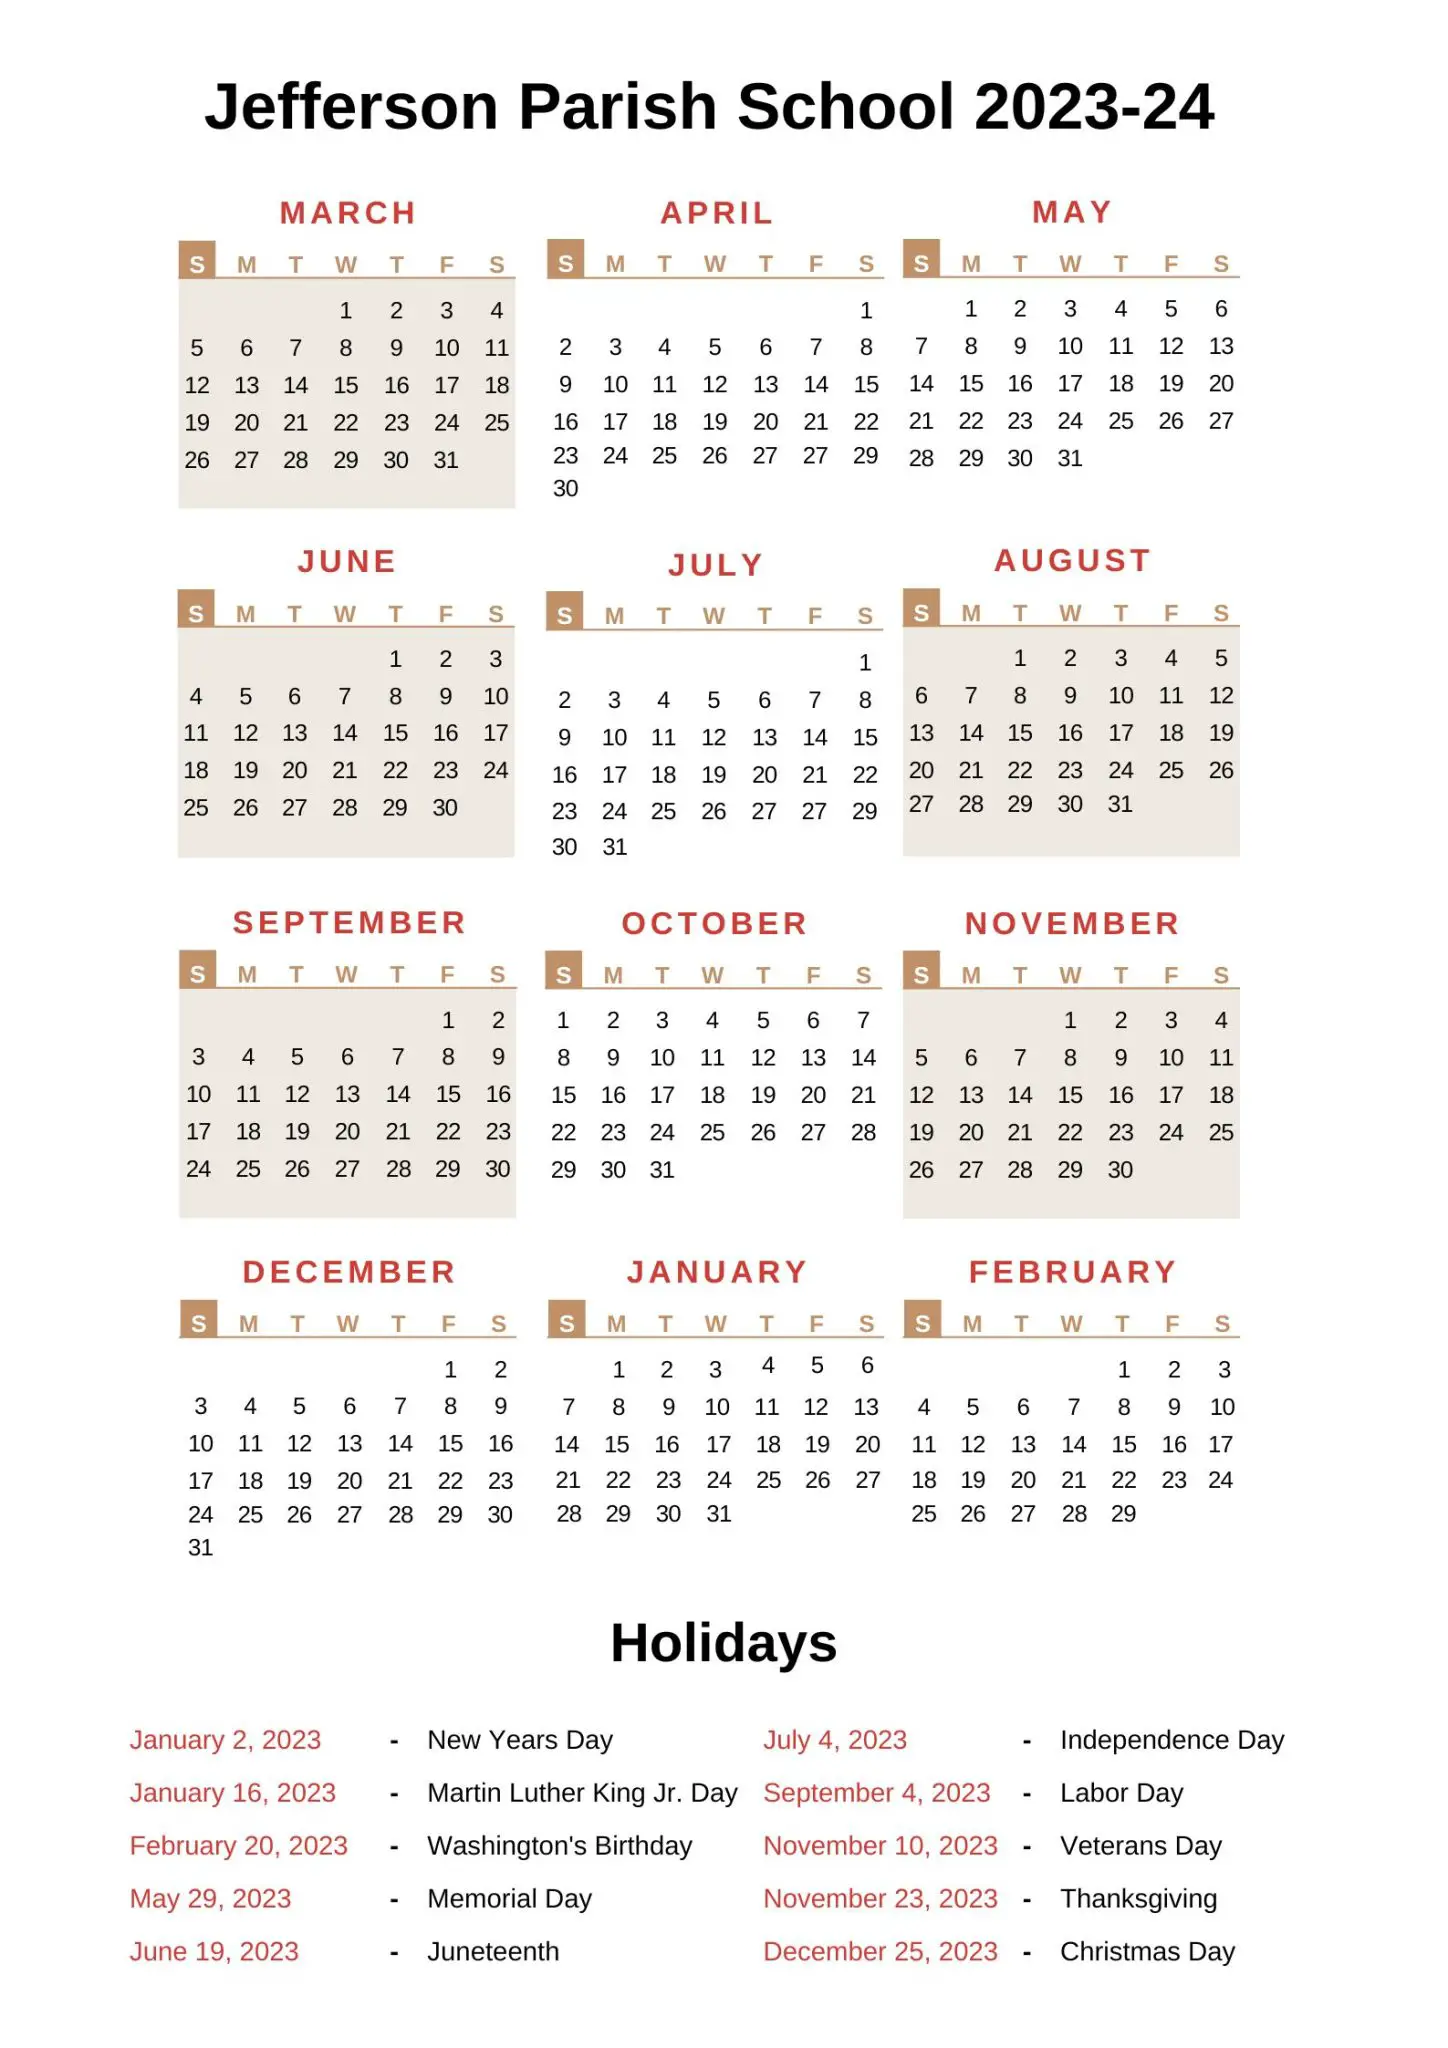 Jefferson Parish Schools Calendar [JPS] 202324 With Holidays